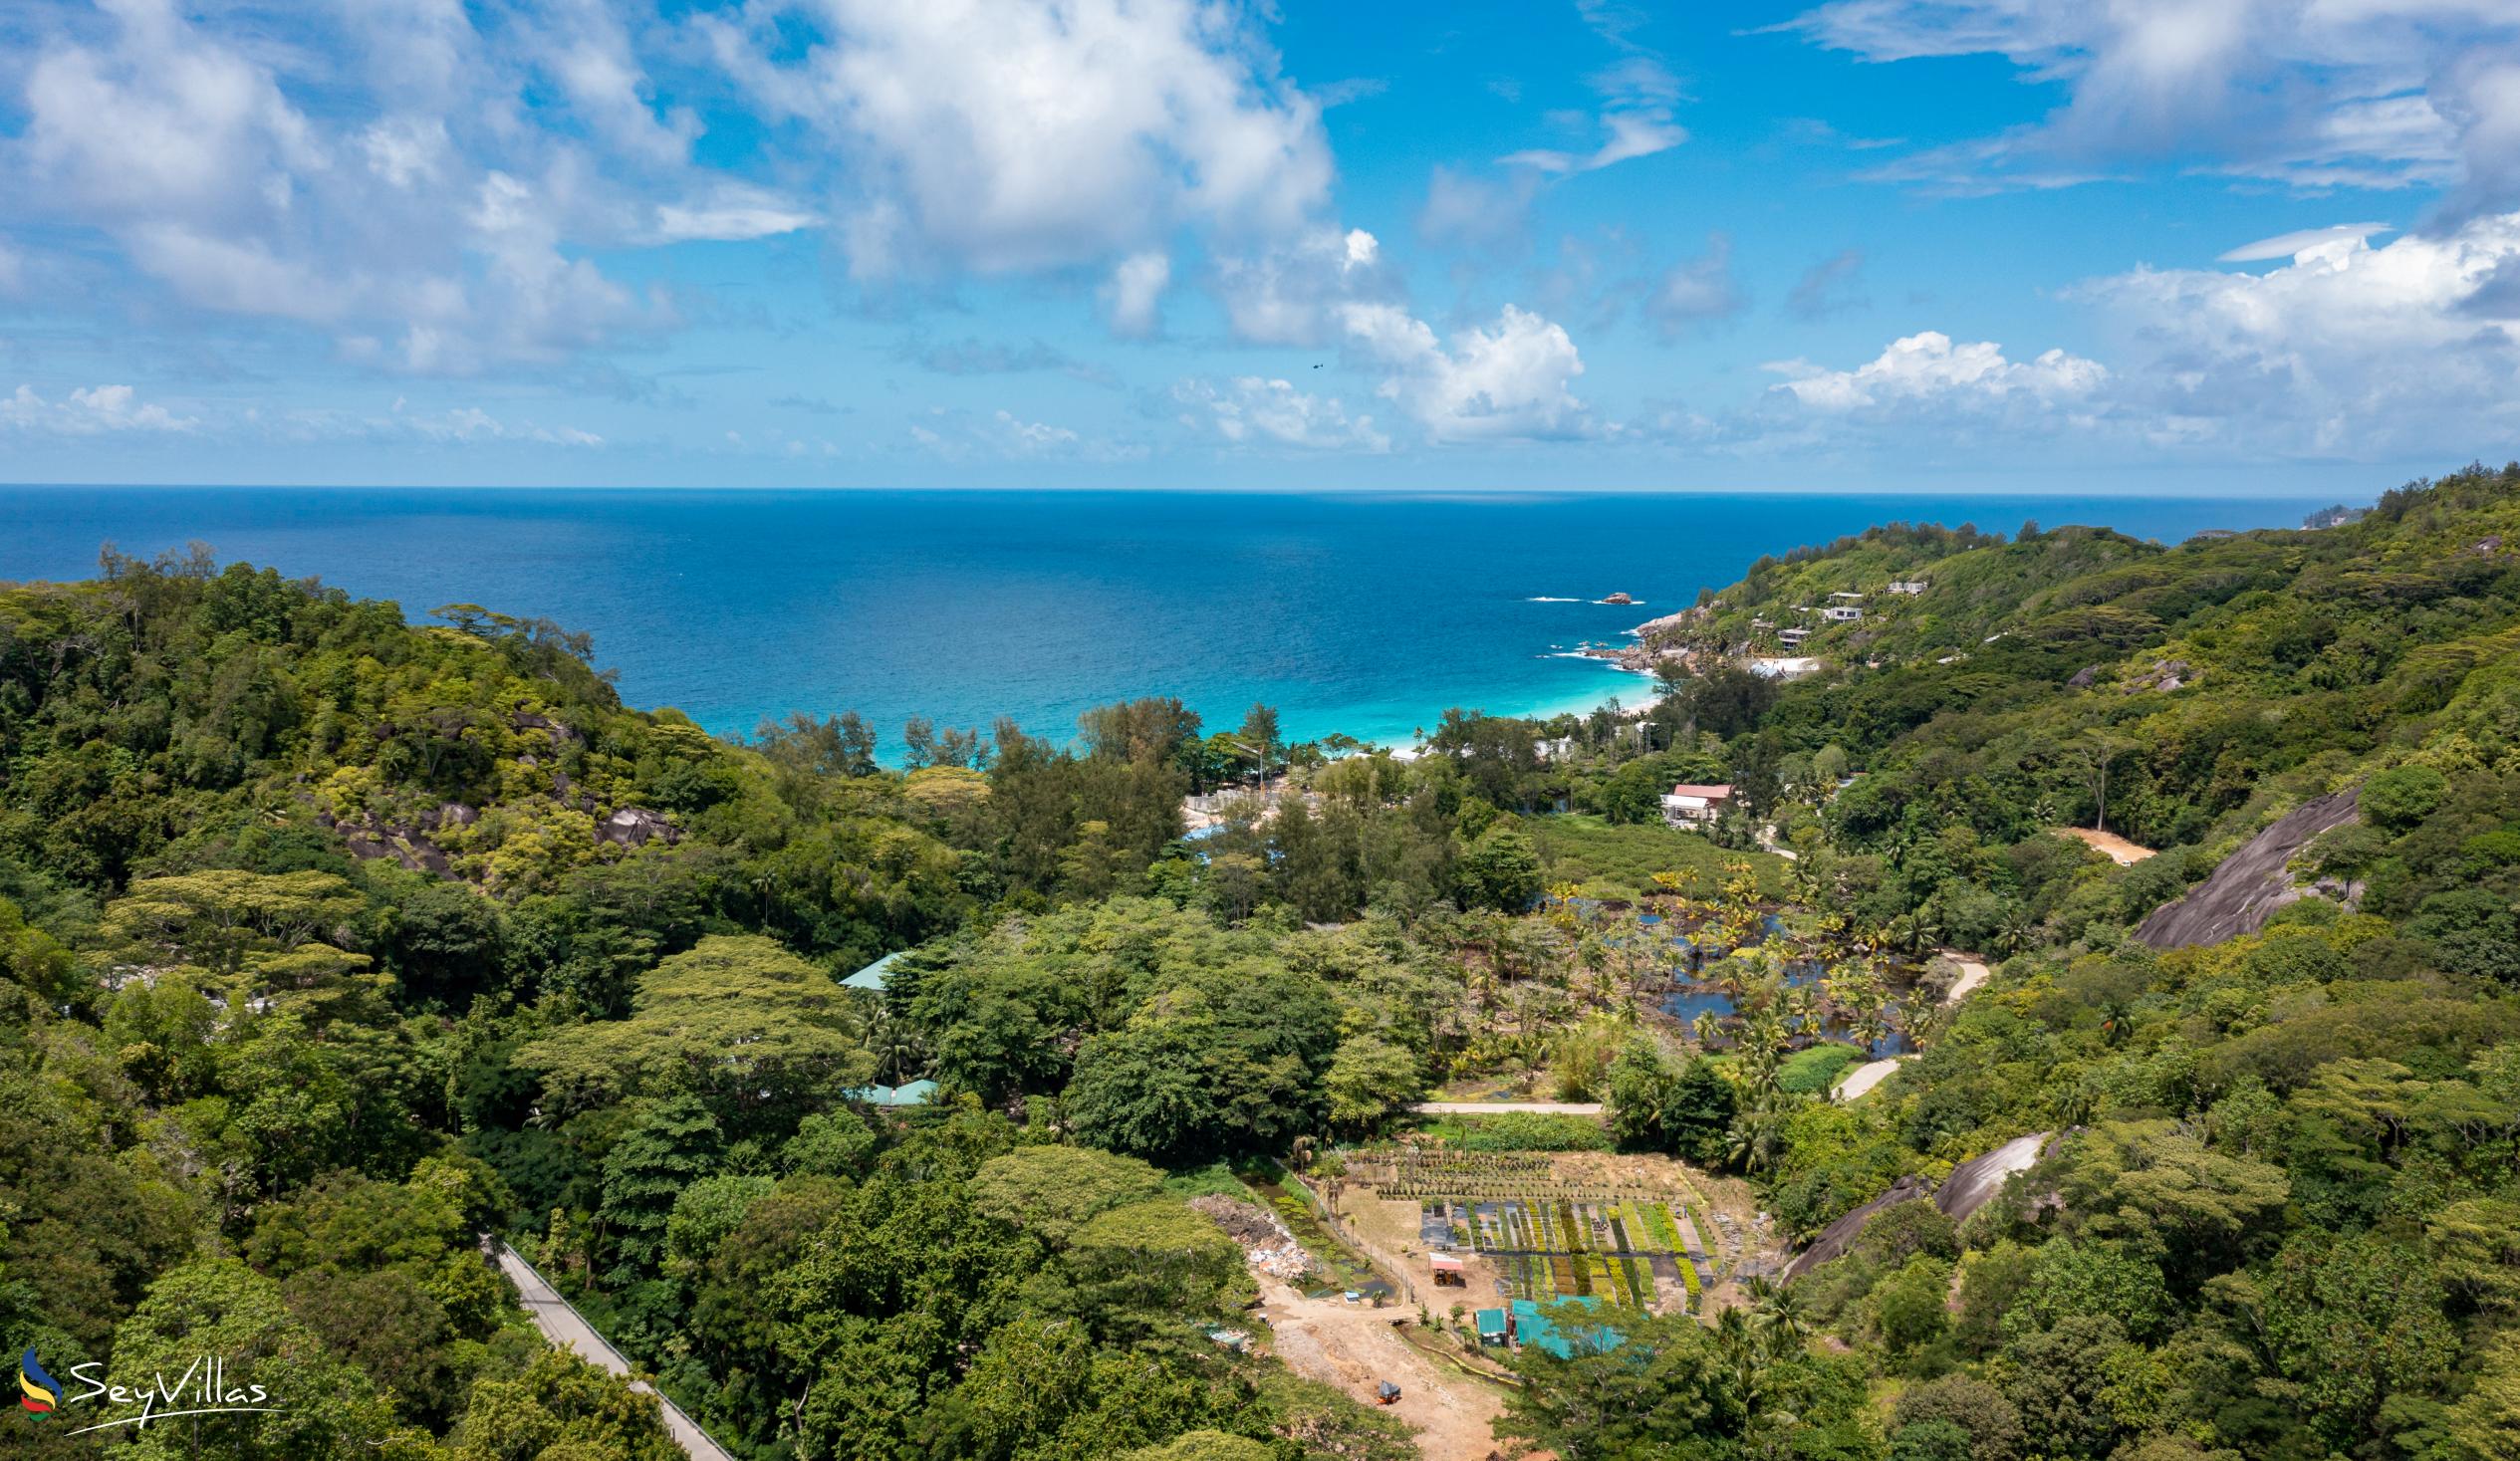 Foto 24: Takamaka Sky Villas - Posizione - Mahé (Seychelles)